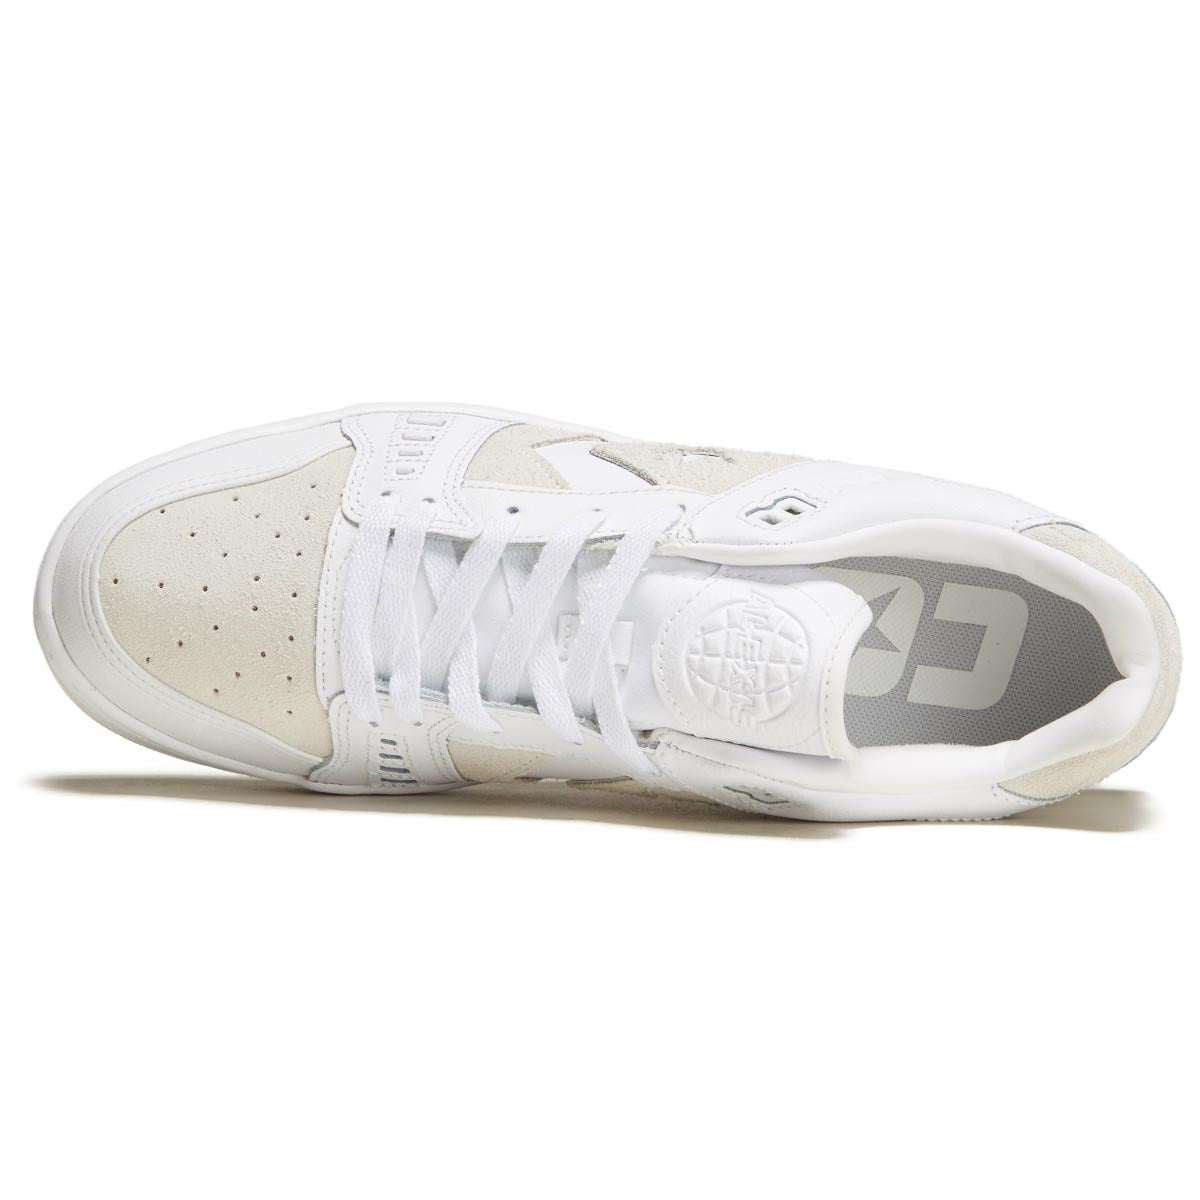 Converse AS-1 Pro Shoes - White/Vaporous Gray/White image 3